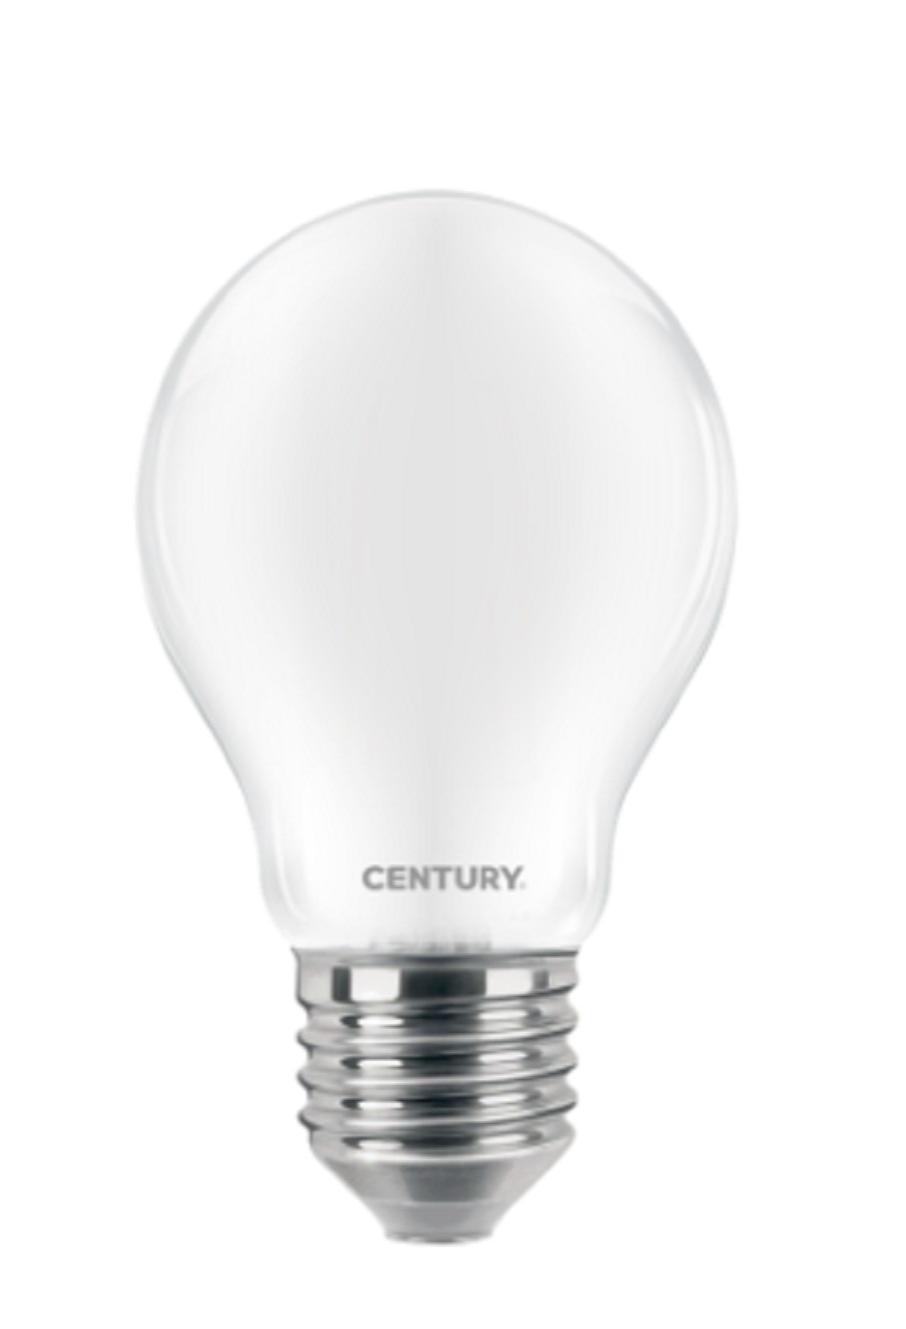 century century lampada filamento led incanto chiara goccia a70 10w e27 4000k ing3-102740